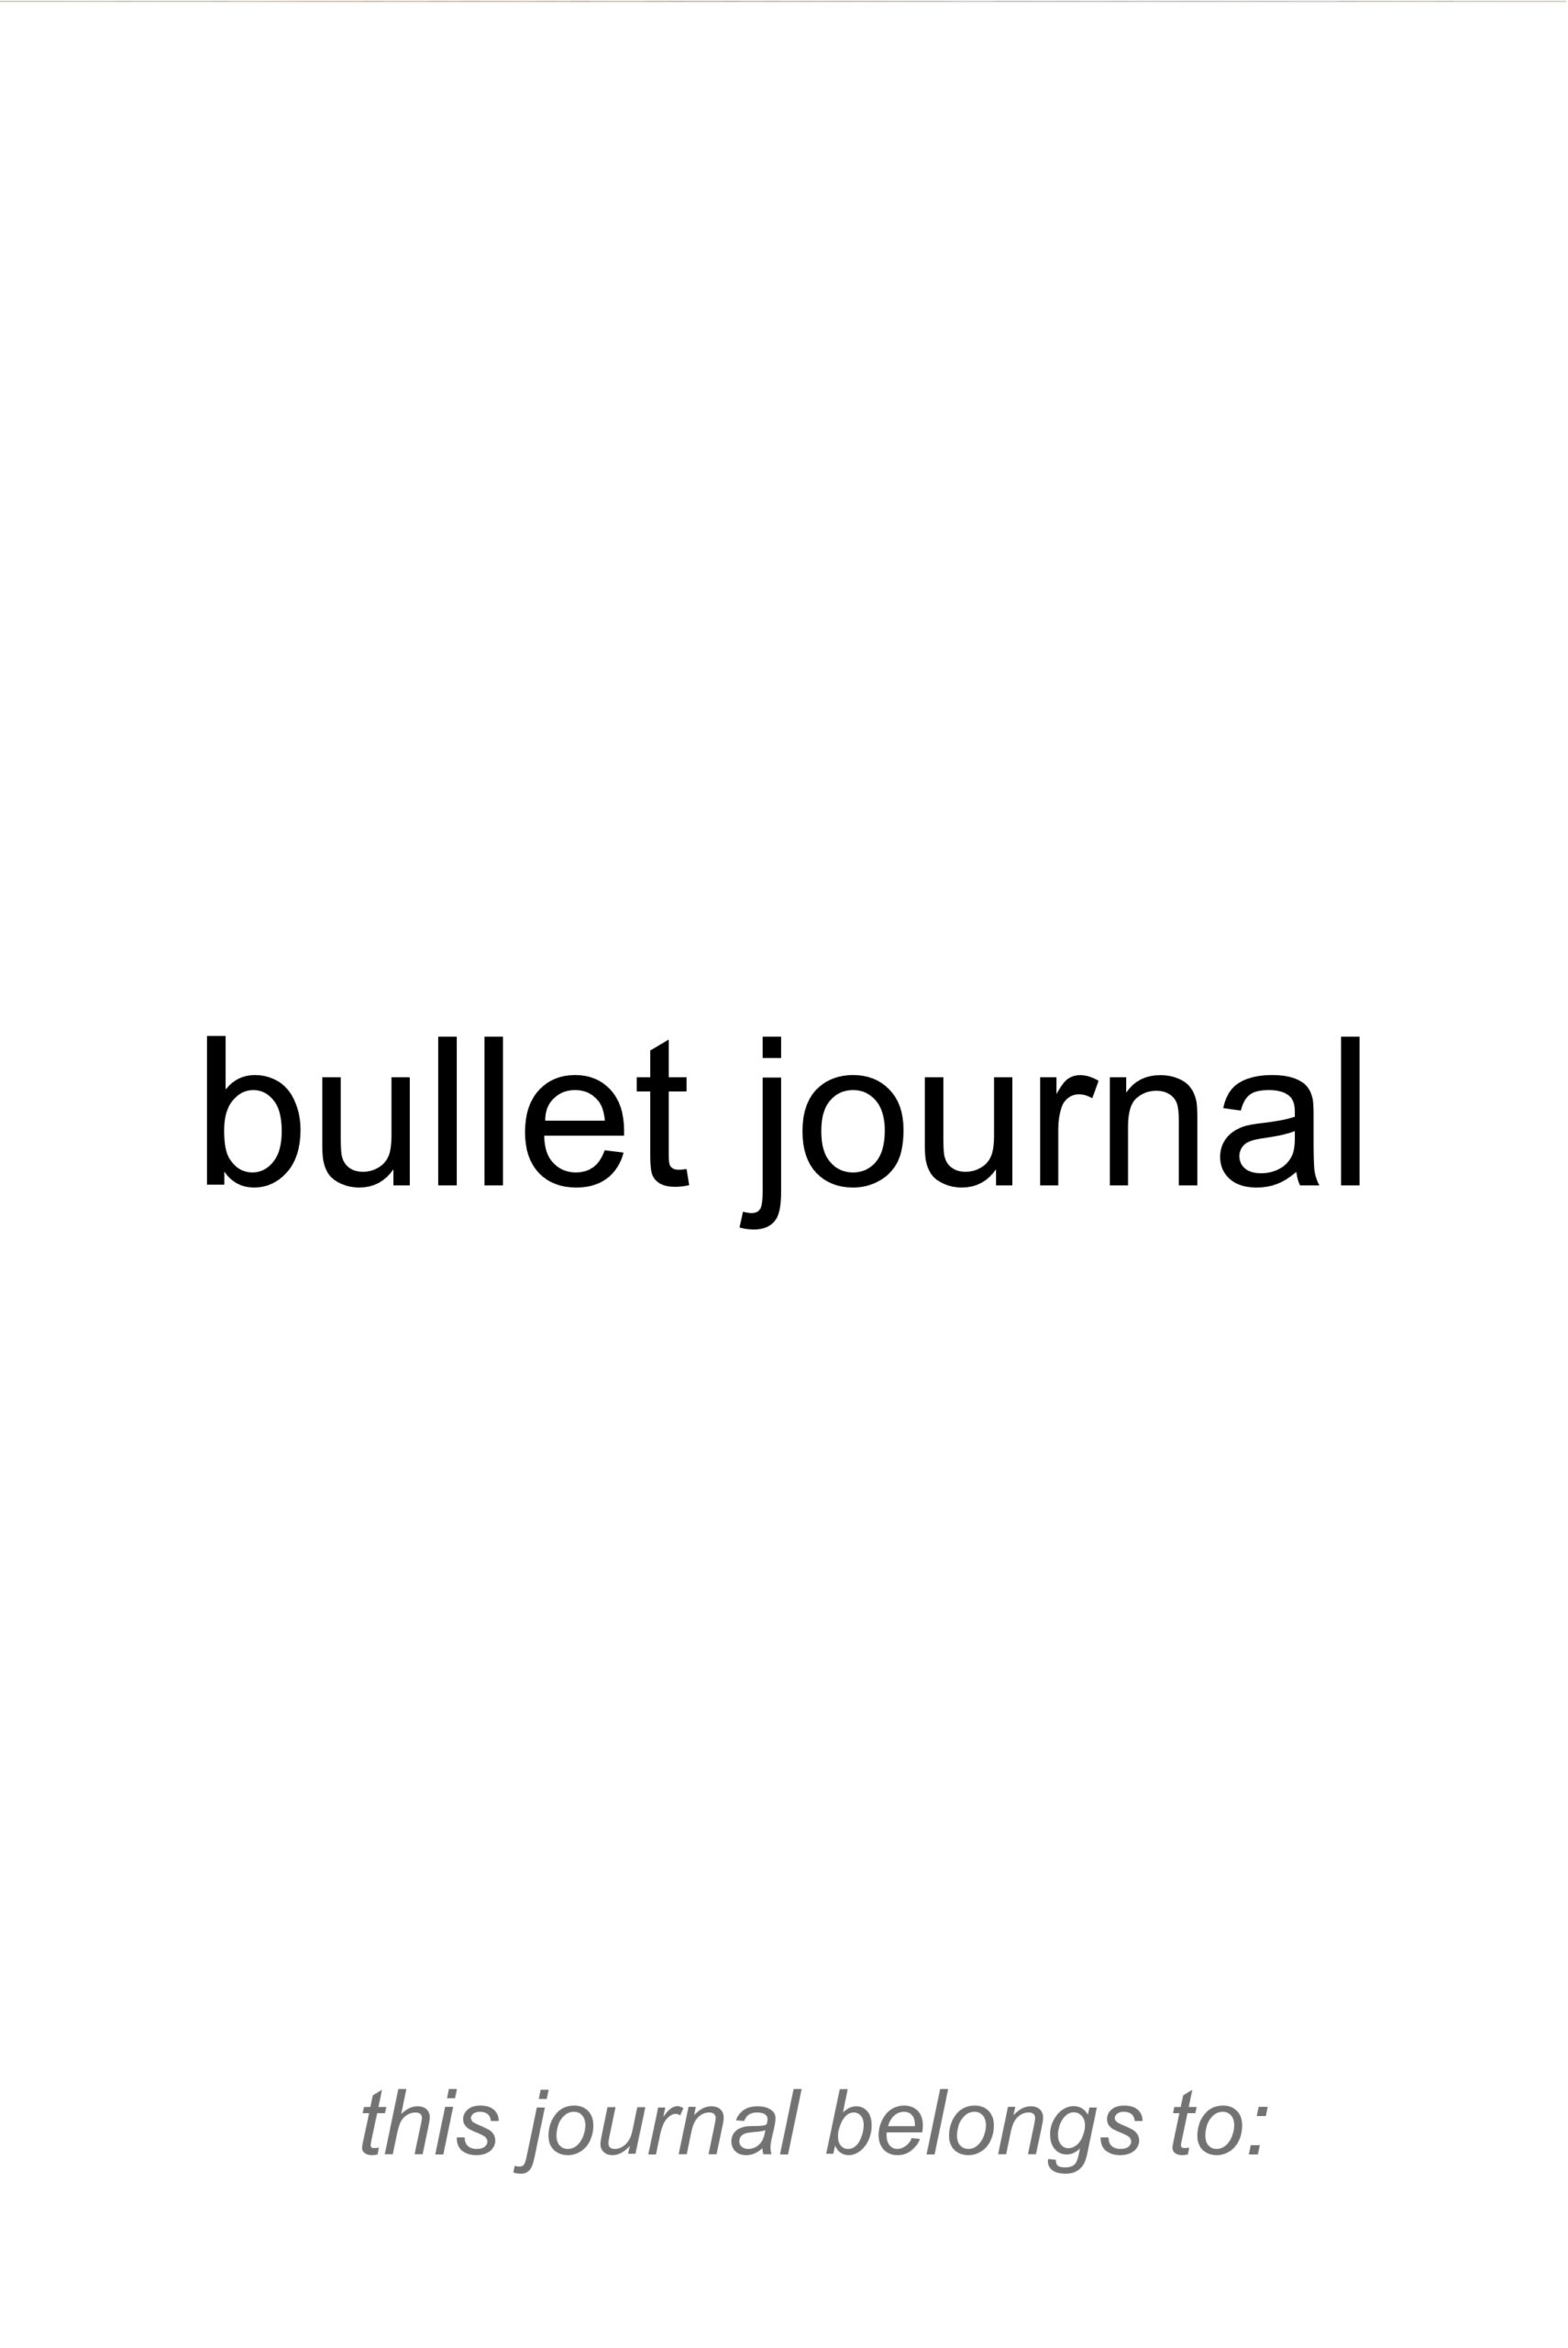 Free bullet journal template 17